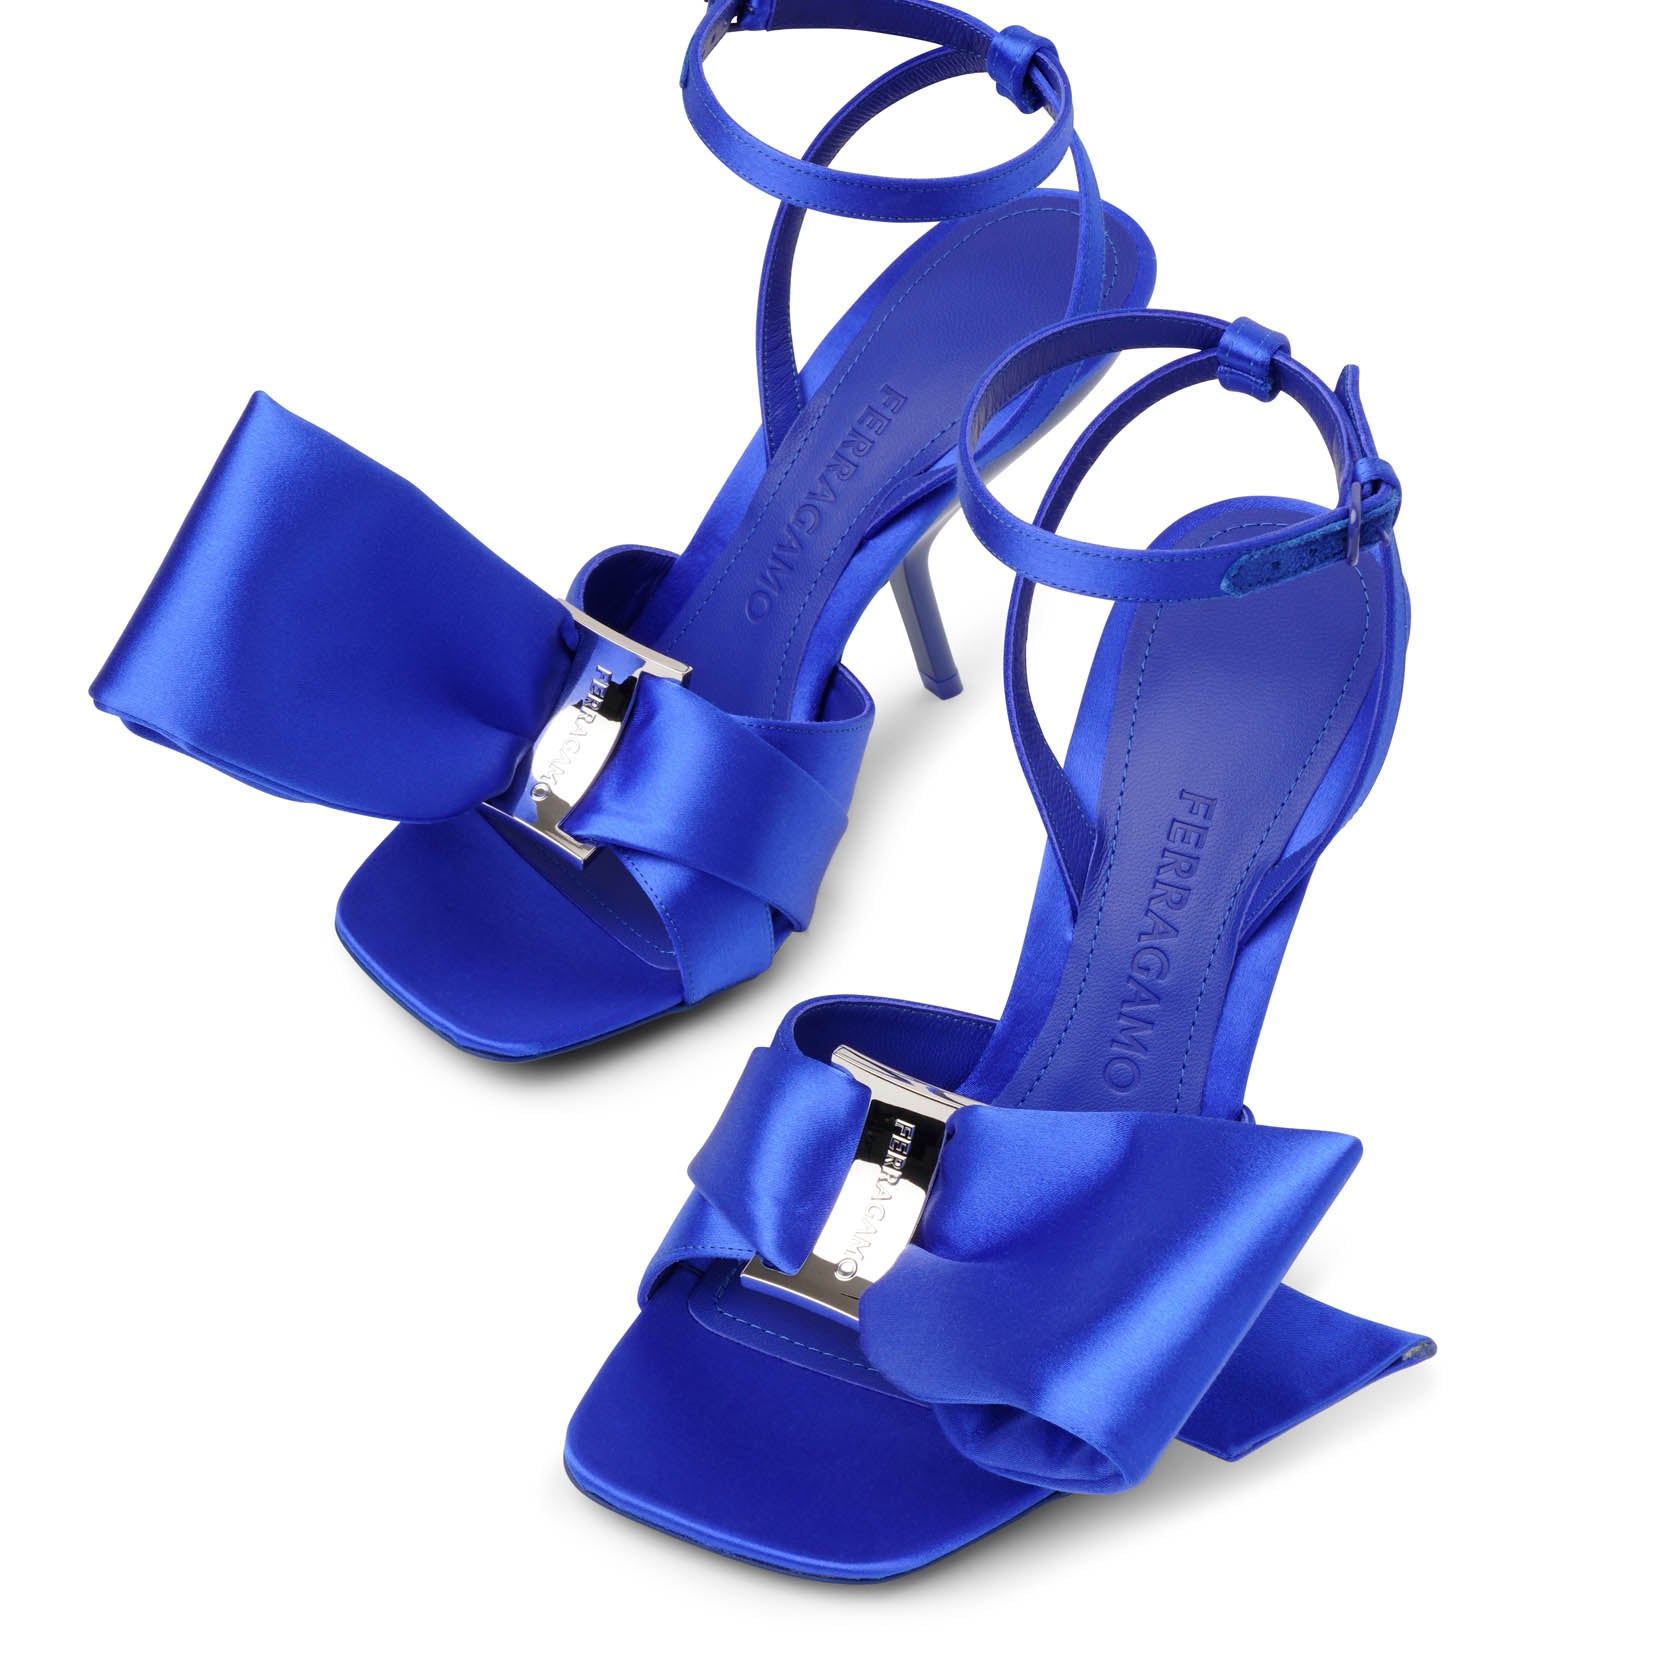 Helena 105 blue satin bow sandals